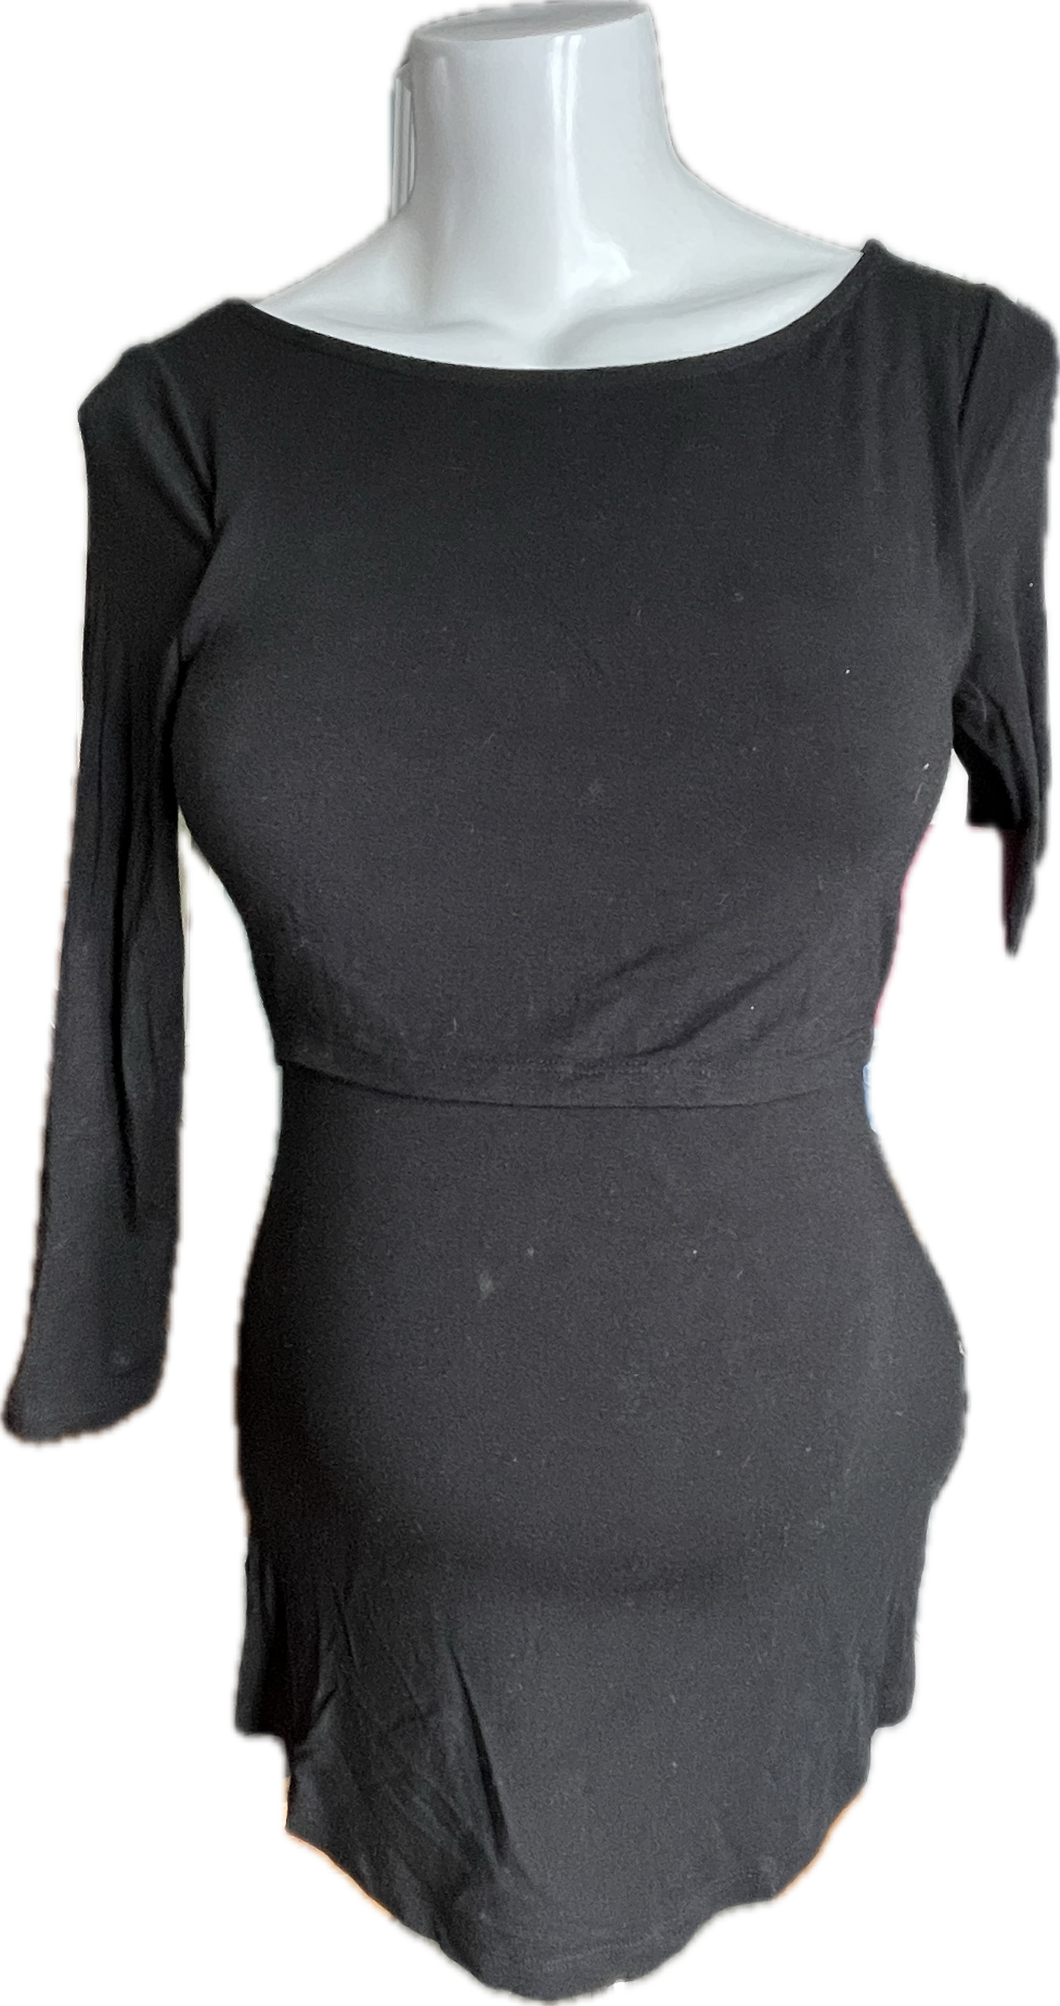 XS LOVE by Gap Maternity Long Sleeve Feeding Top in Black